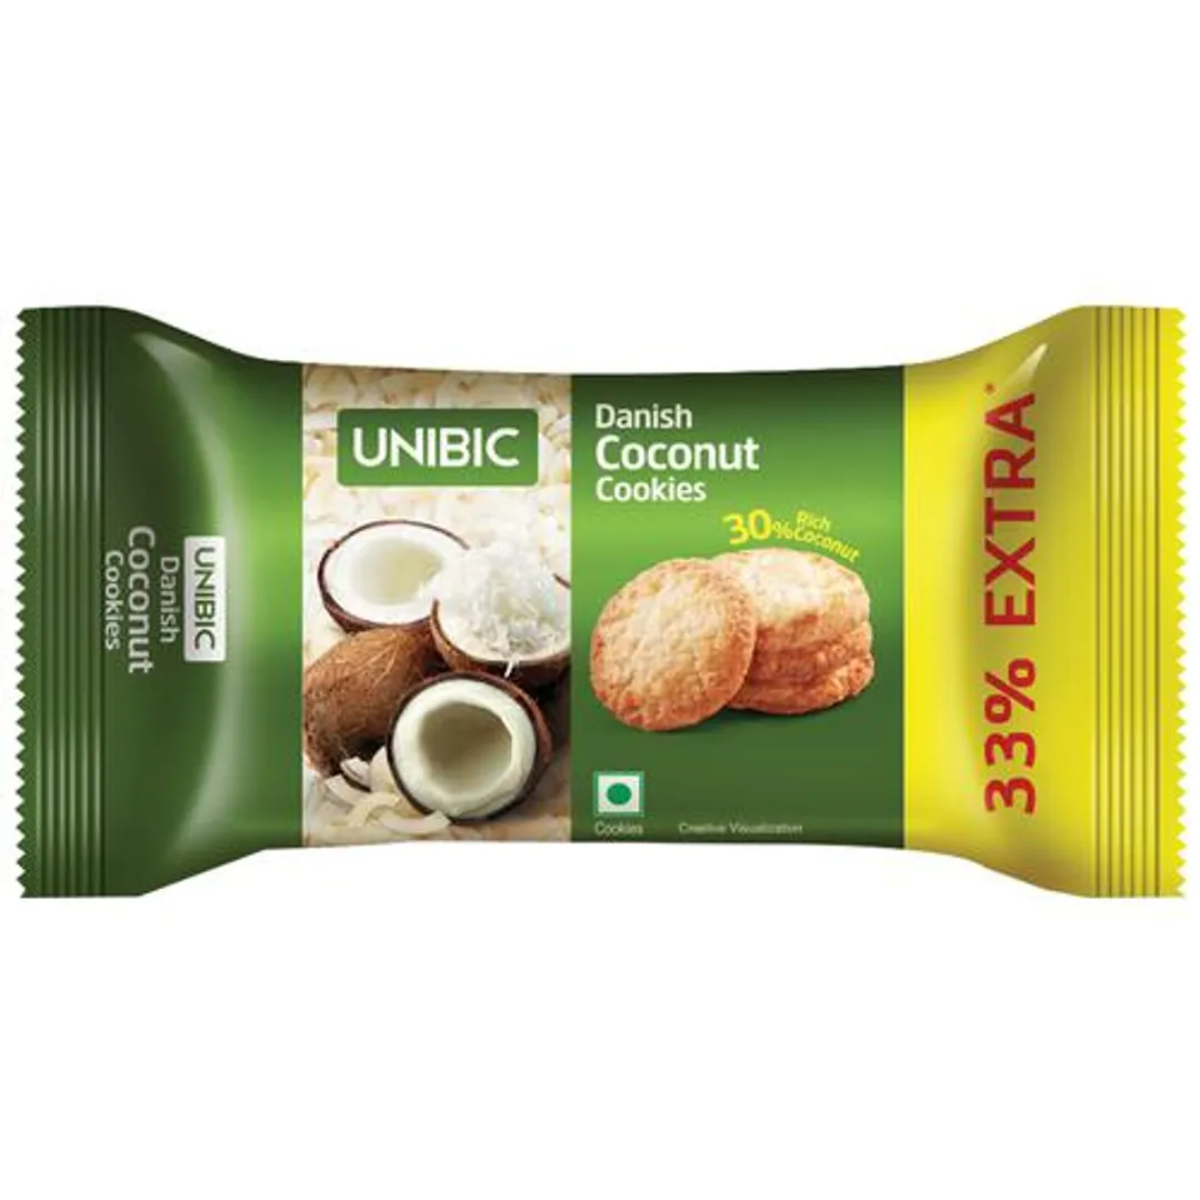 UNIBIC Danish Coconut Cookies